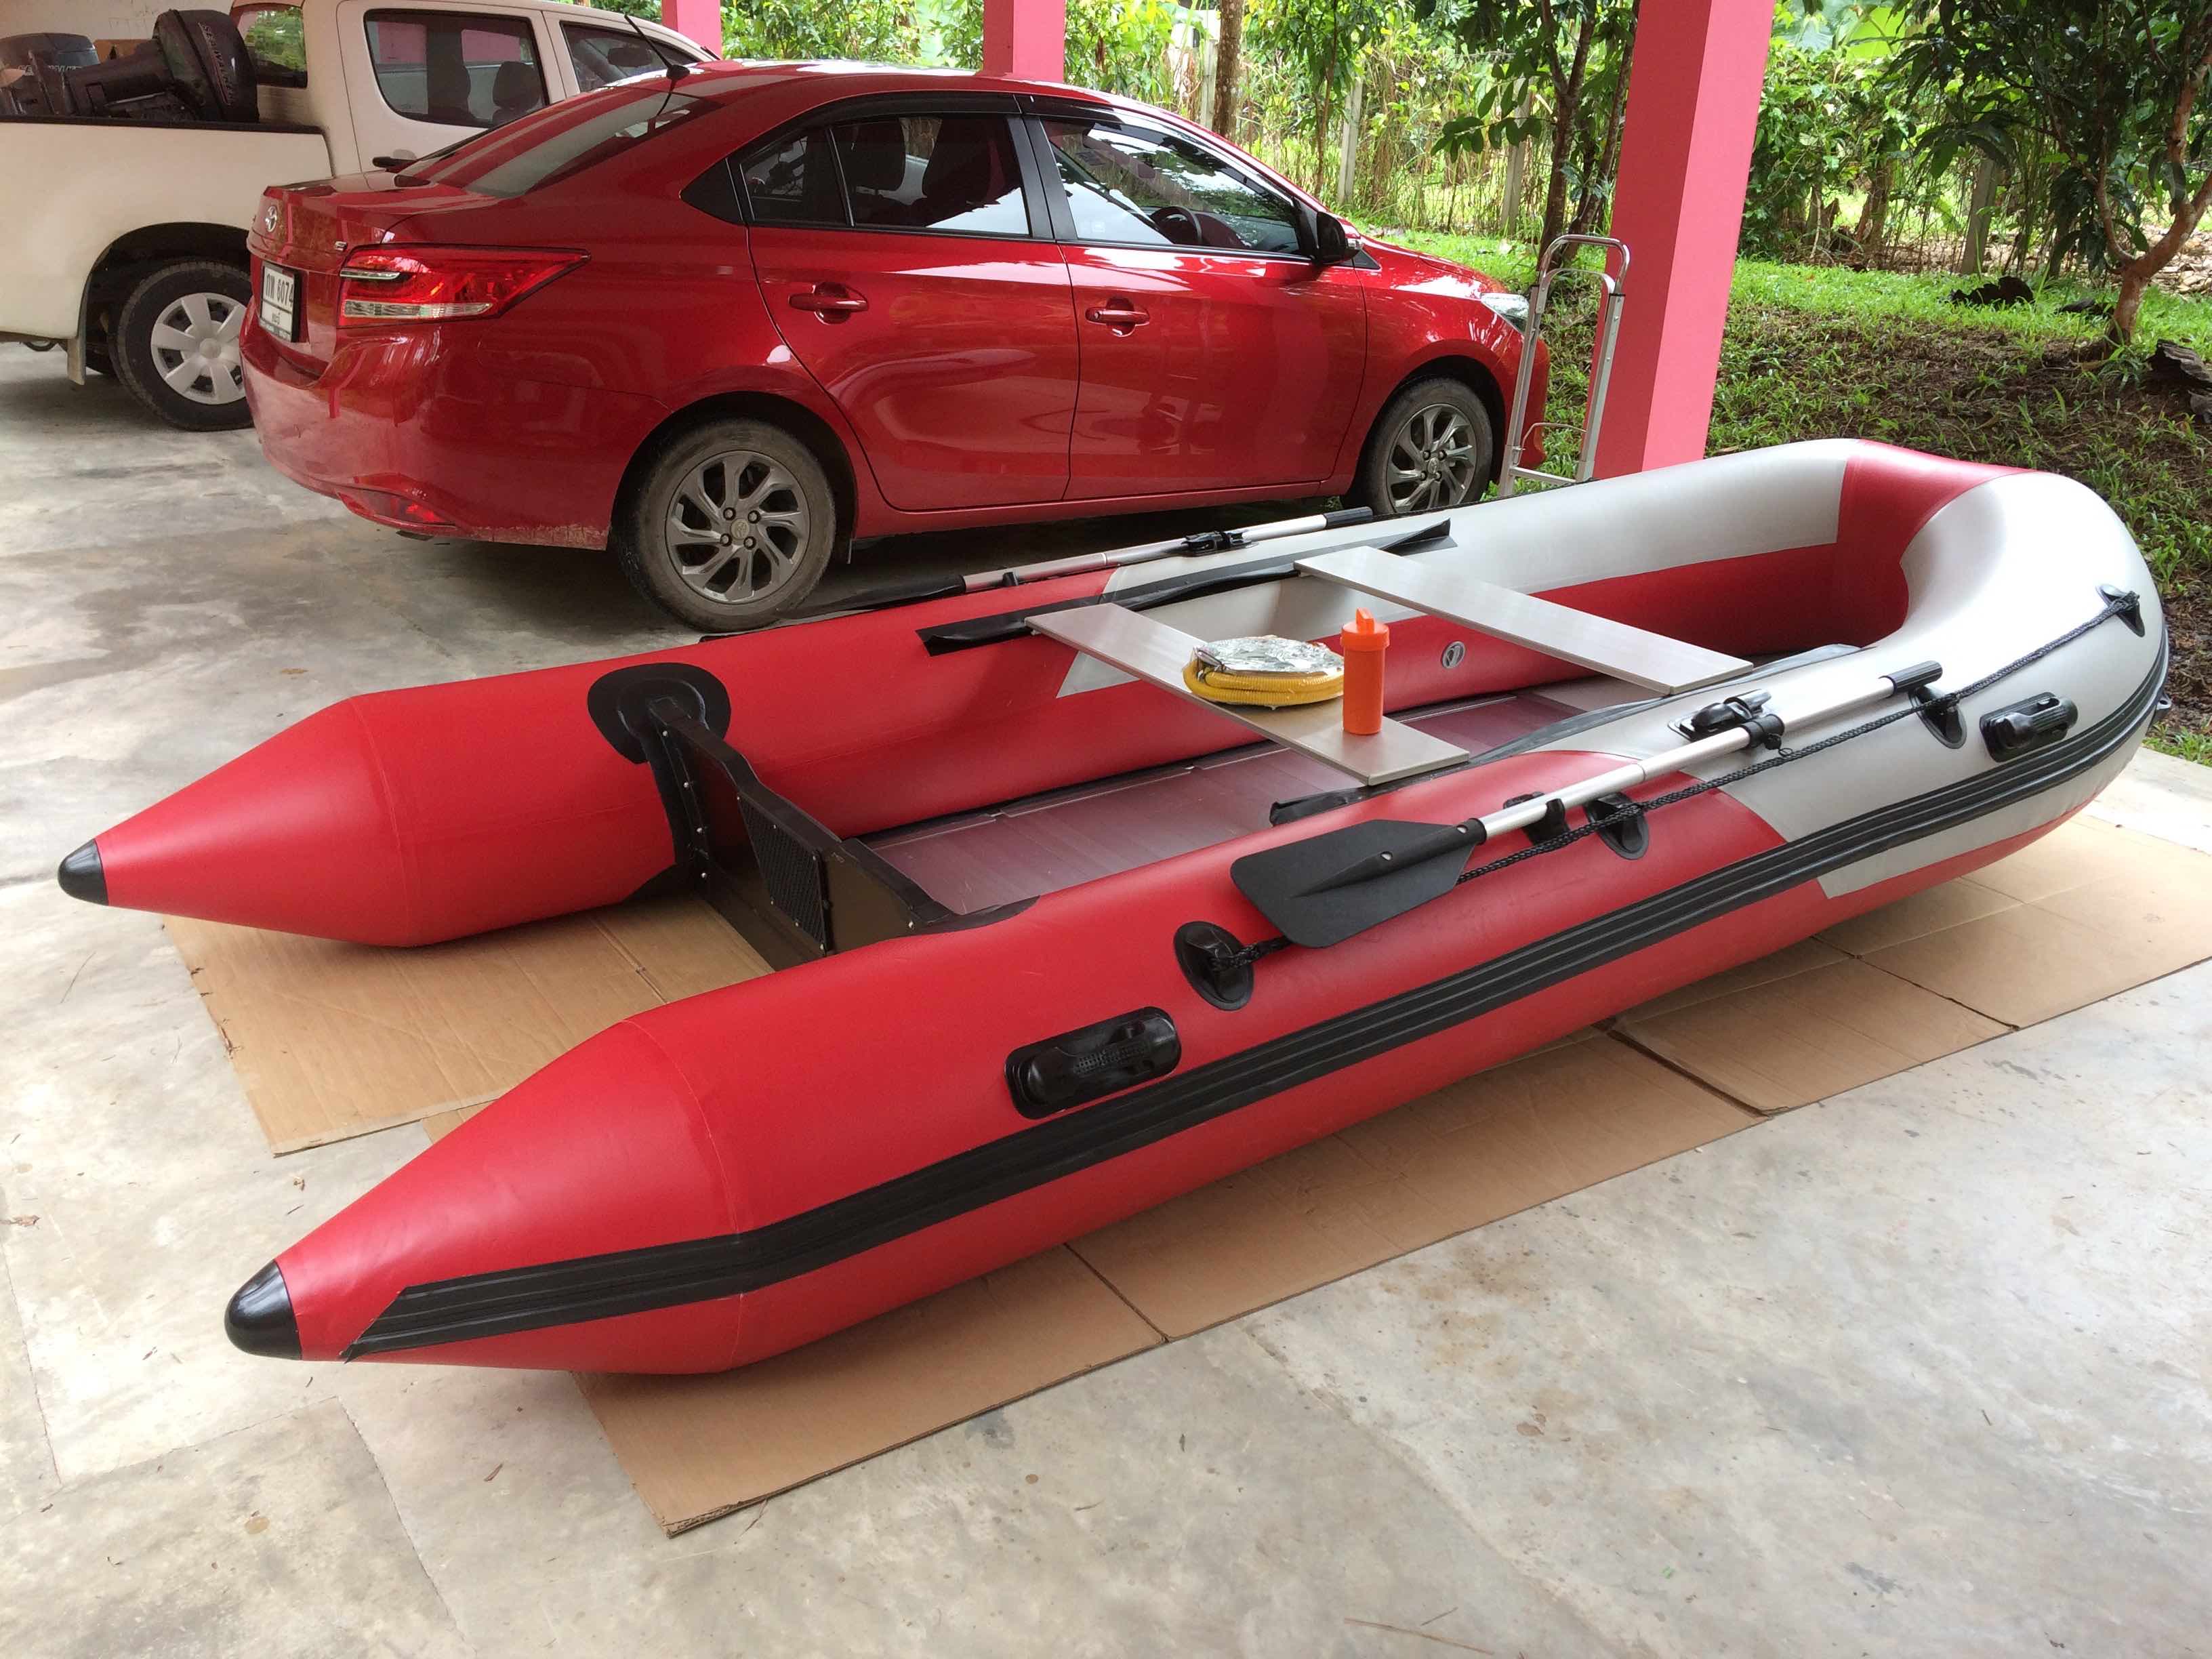 AL-380BT BigTube Inflatable boat with aluminium floor